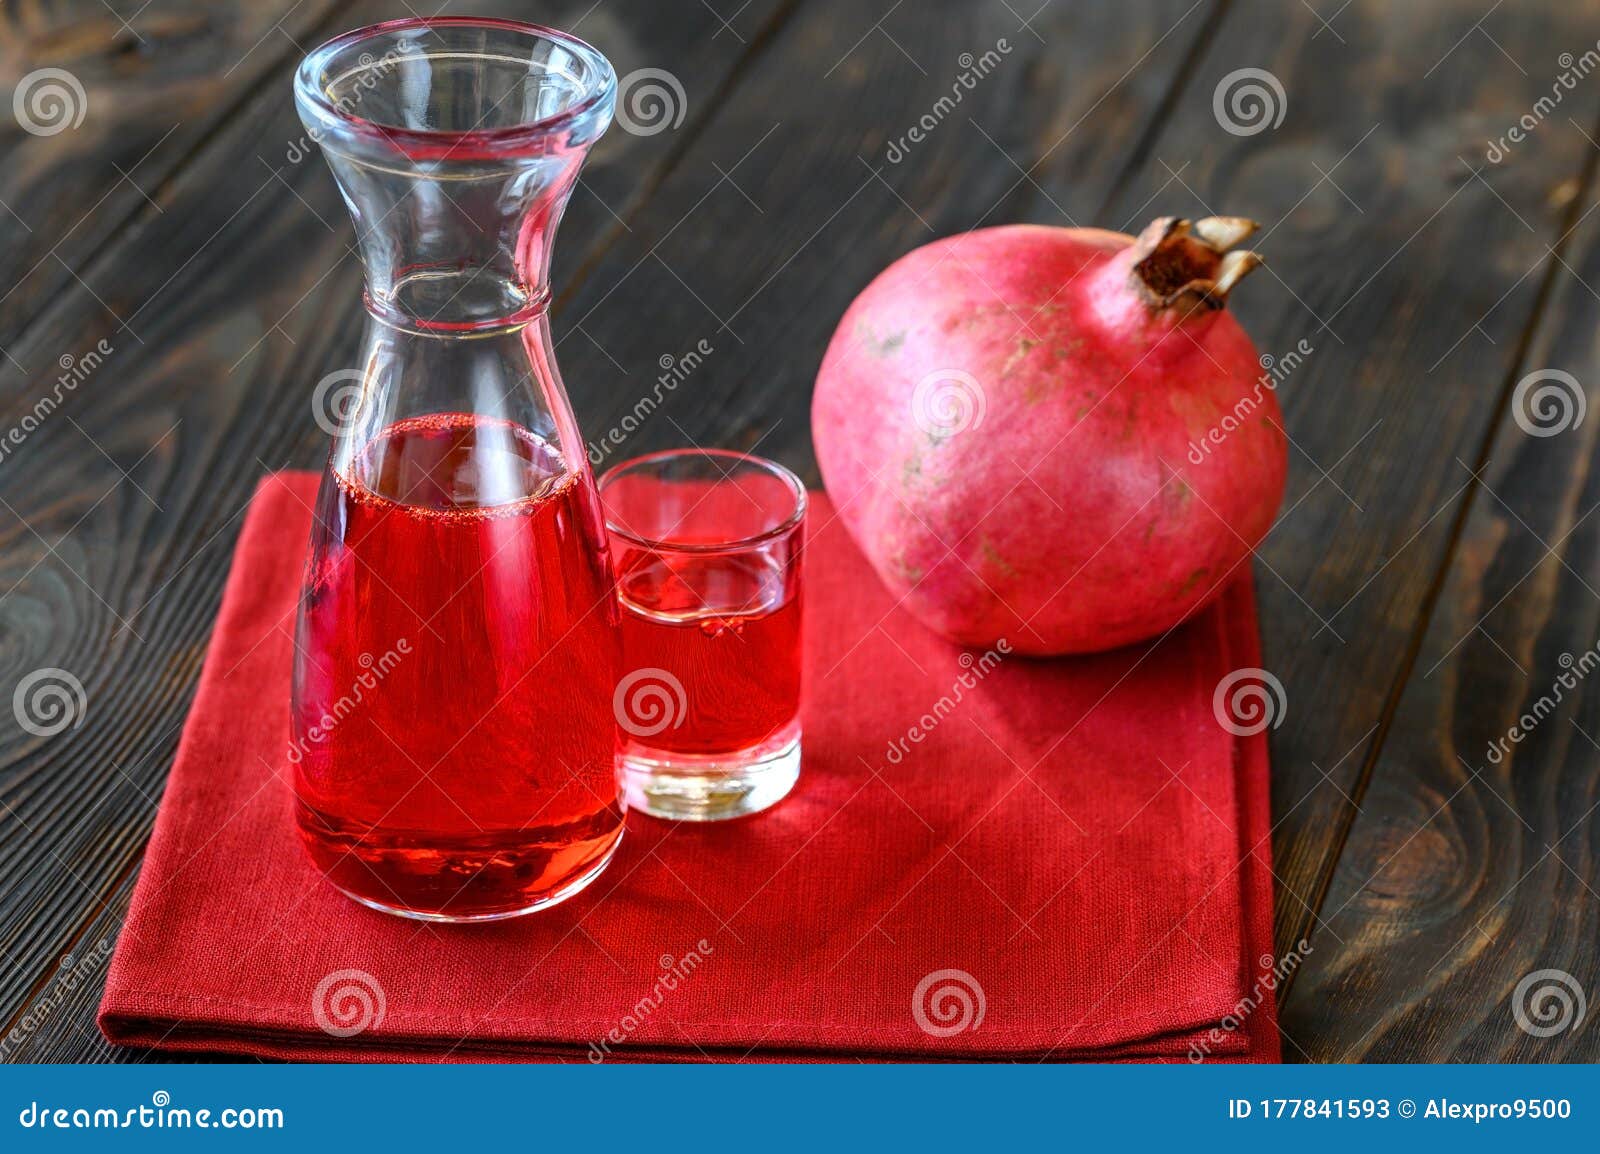 glass jug of grenadine syrup